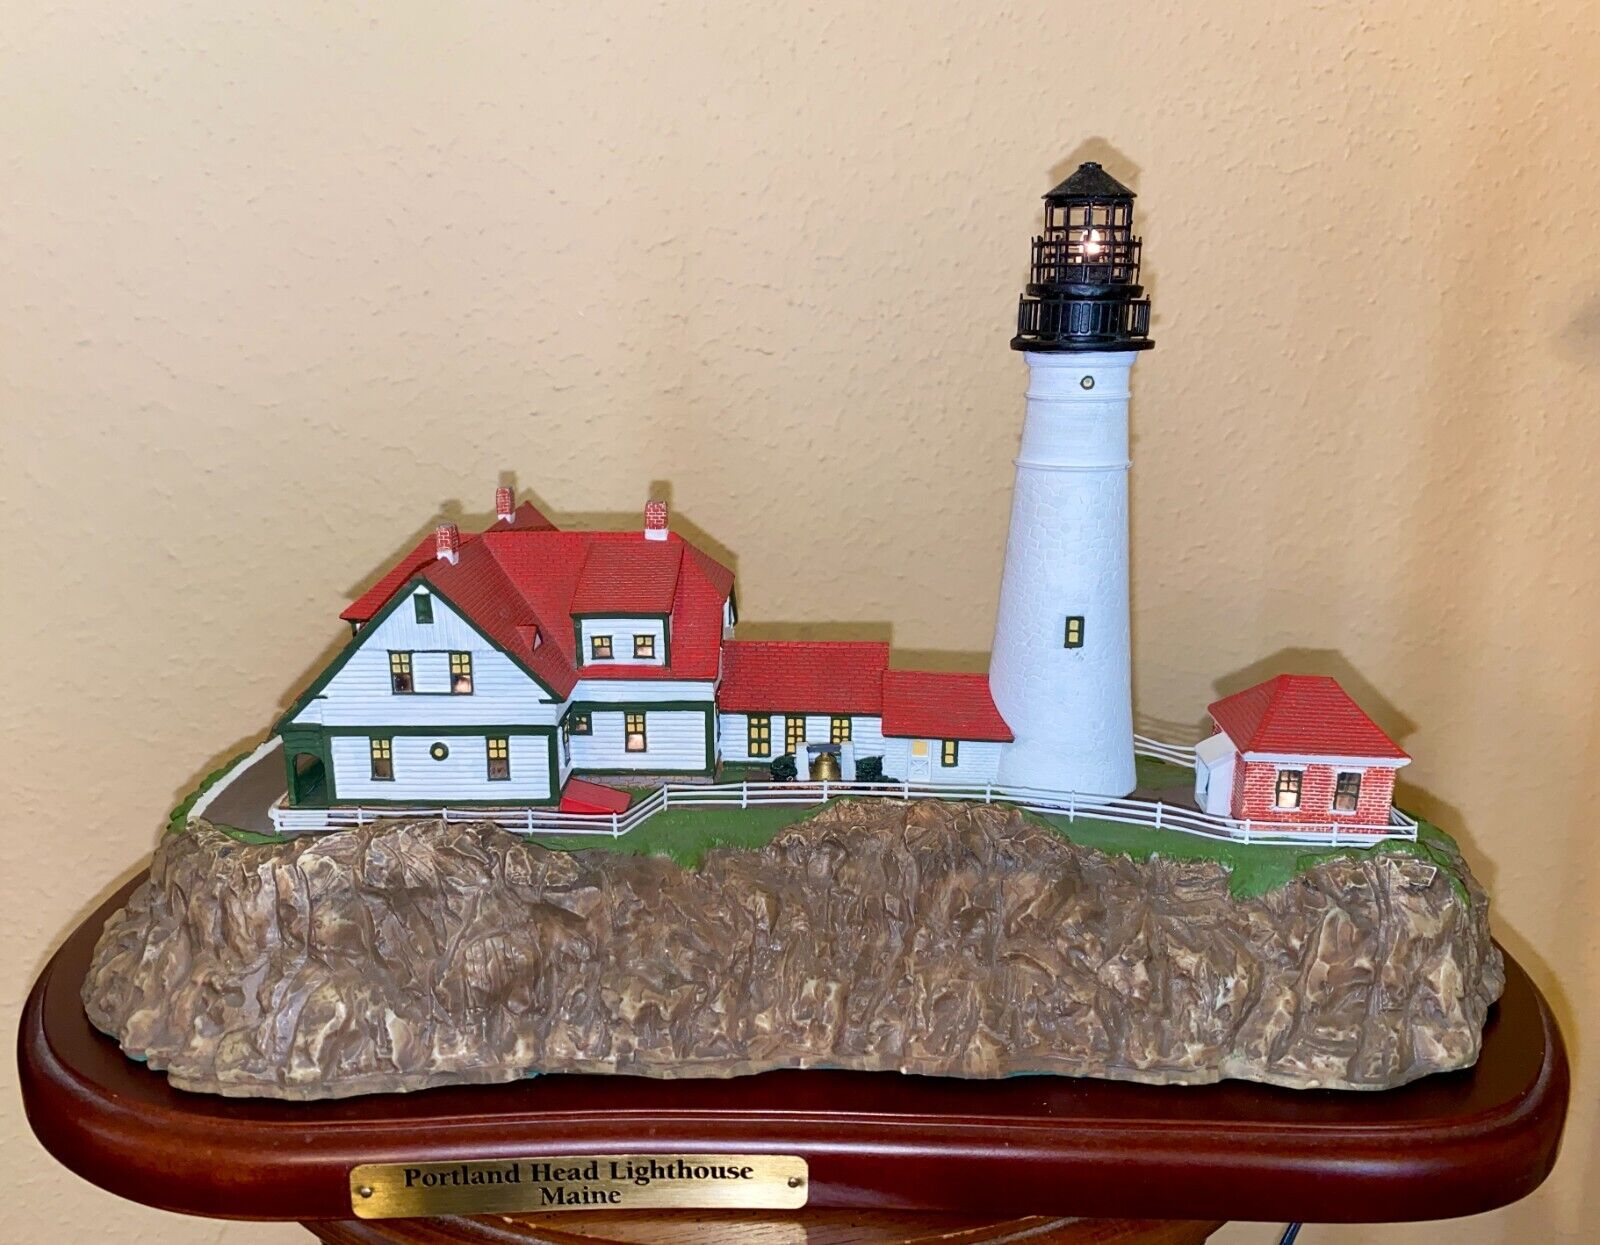 The Danbury Mint 1994 “Portland Head Lighthouse” Maine with Base